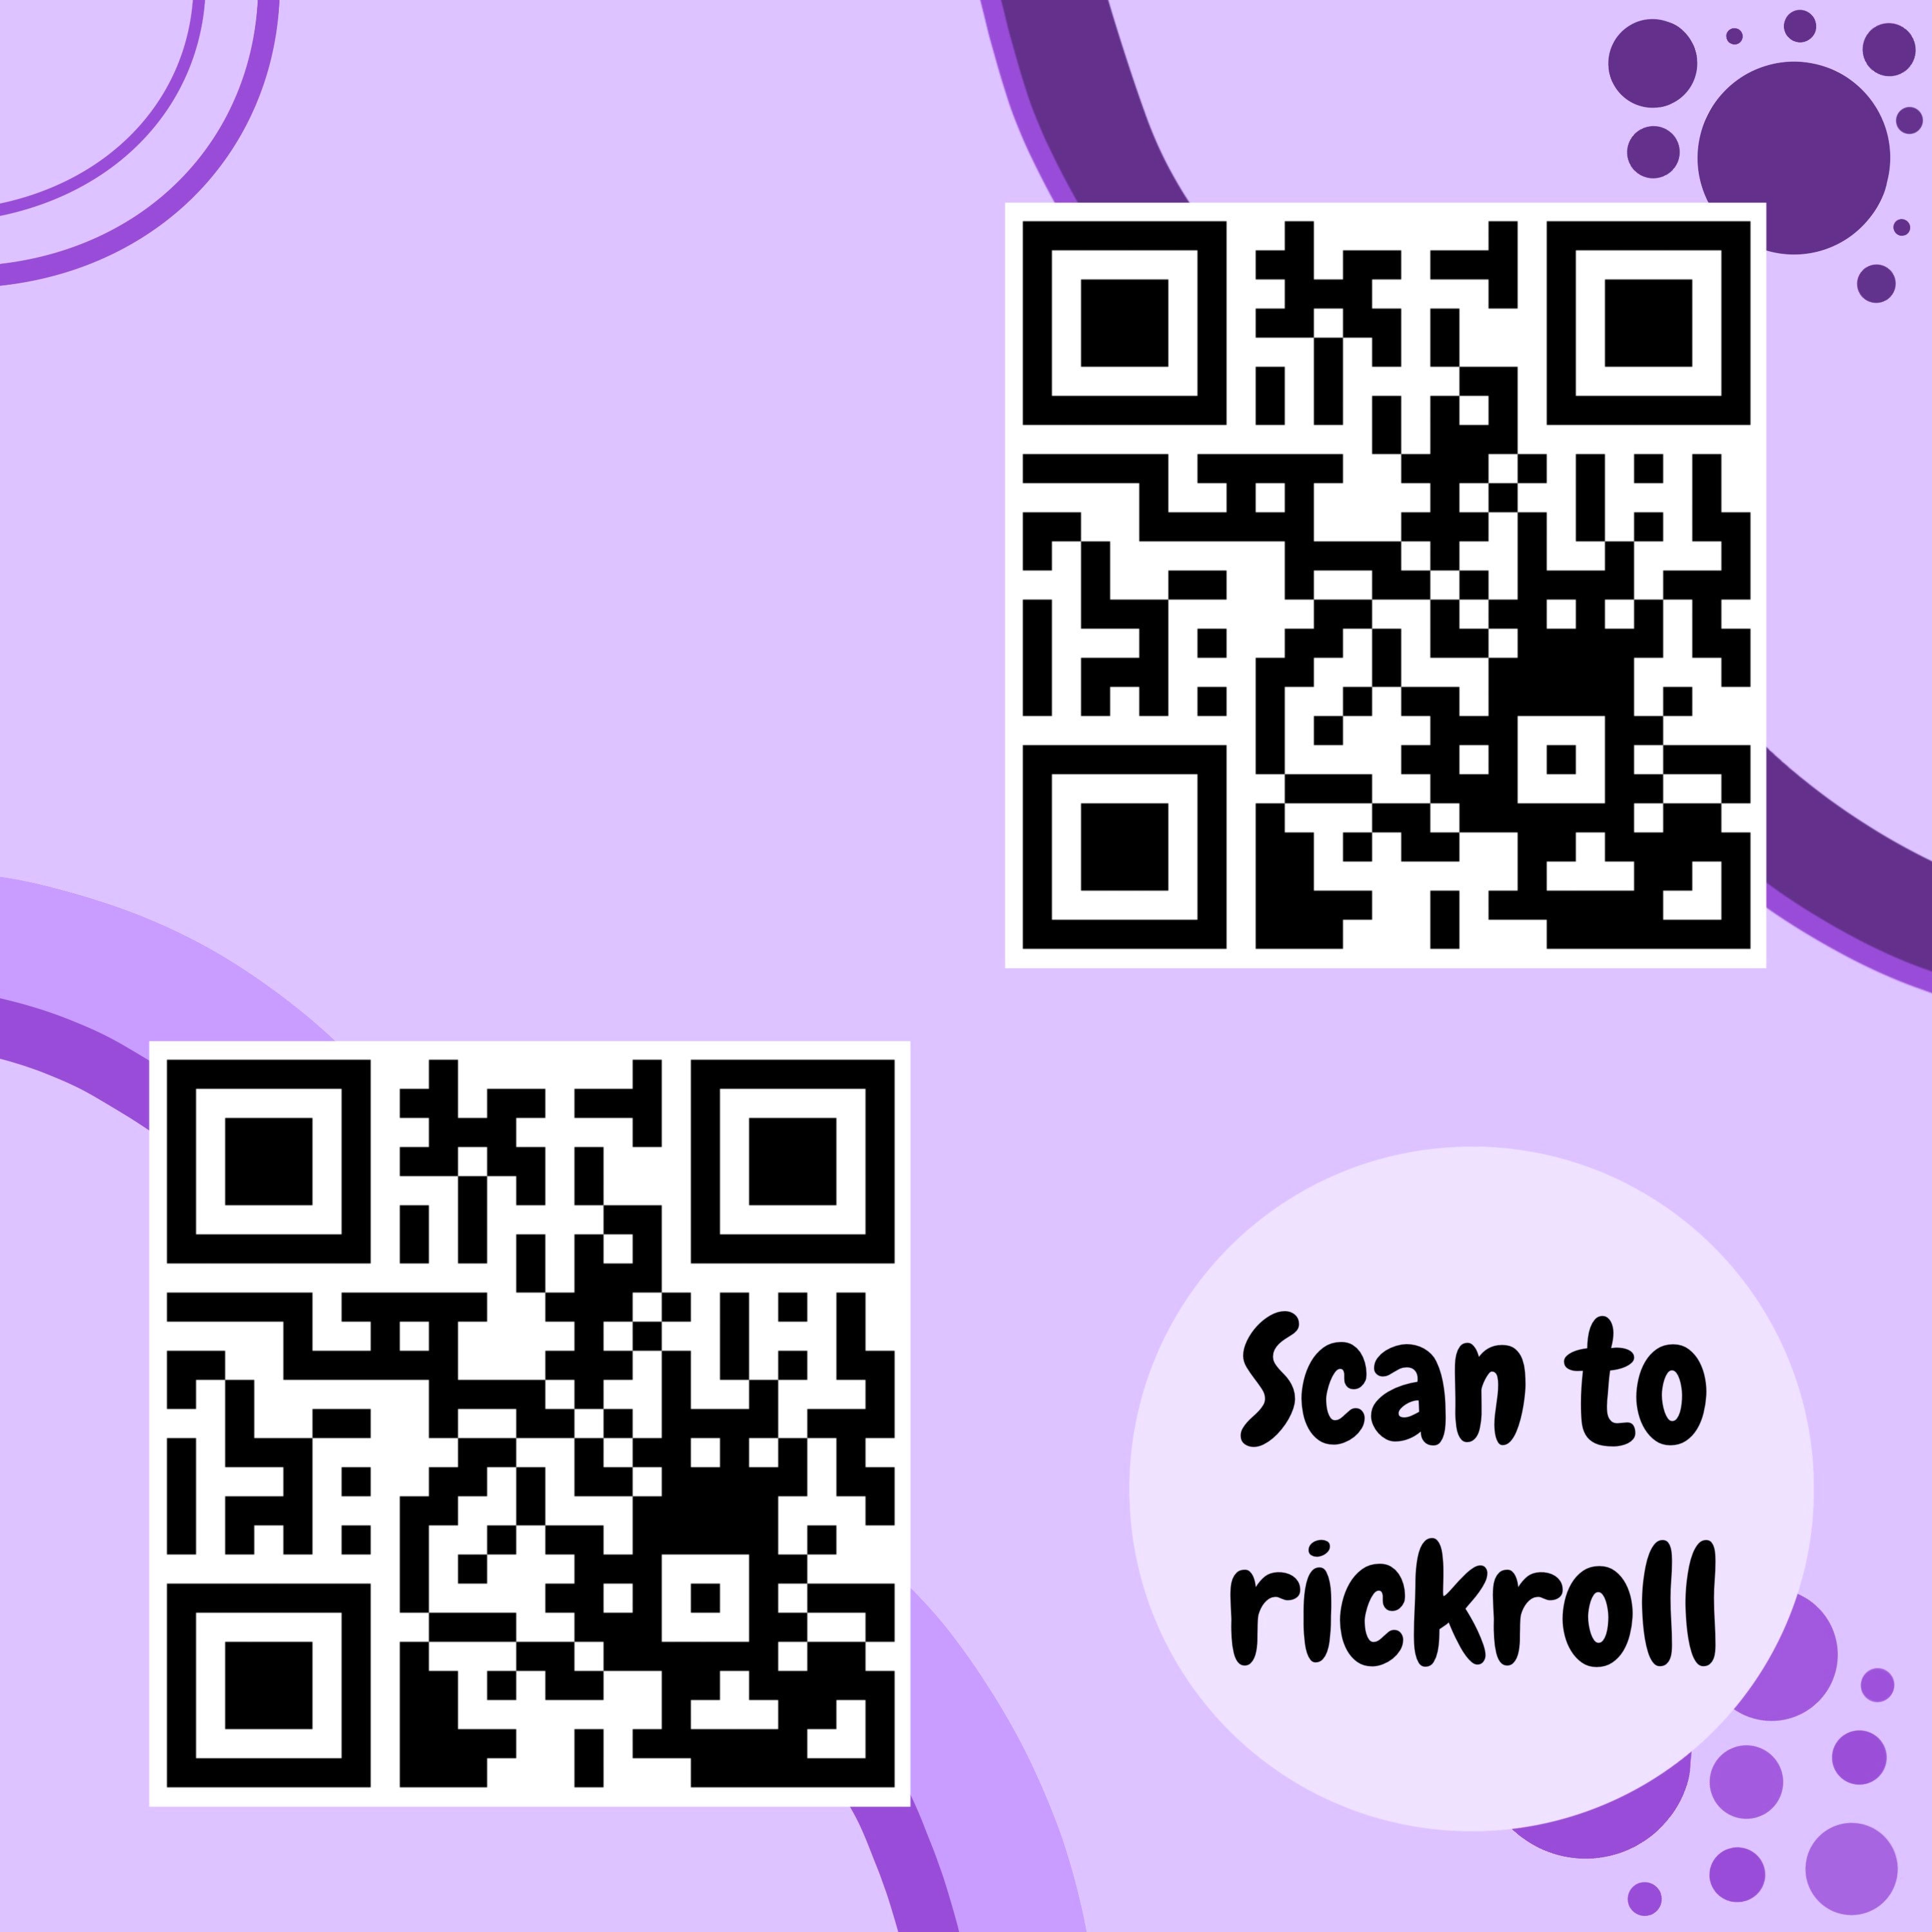 Rick Roll funny prank Video link readable QR Code 3x3 pattern | Postcard